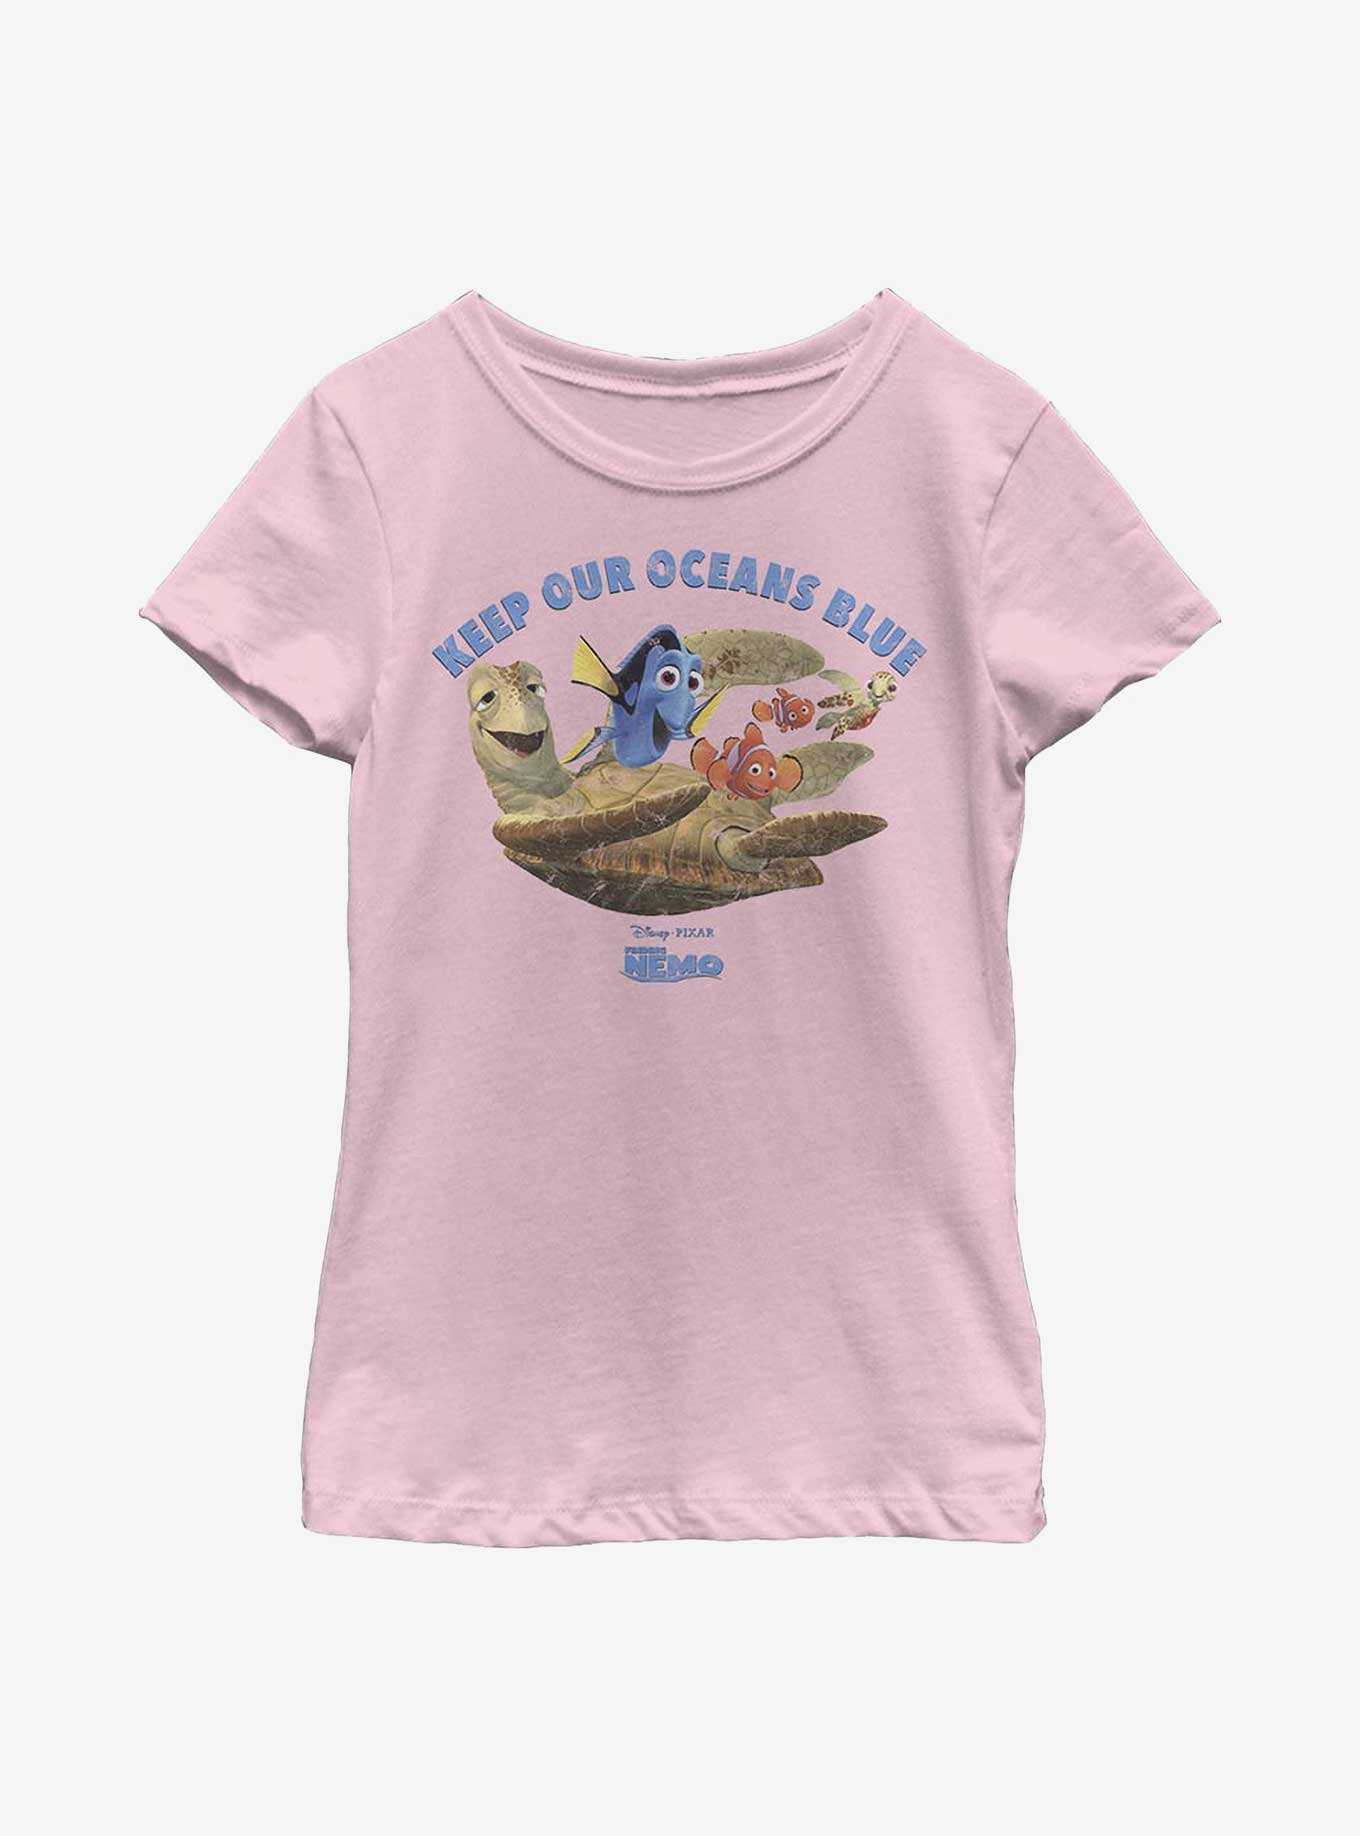 Disney Pixar Finding Nemo Keep Our Oceans Blue Youth Girls T-Shirt, , hi-res